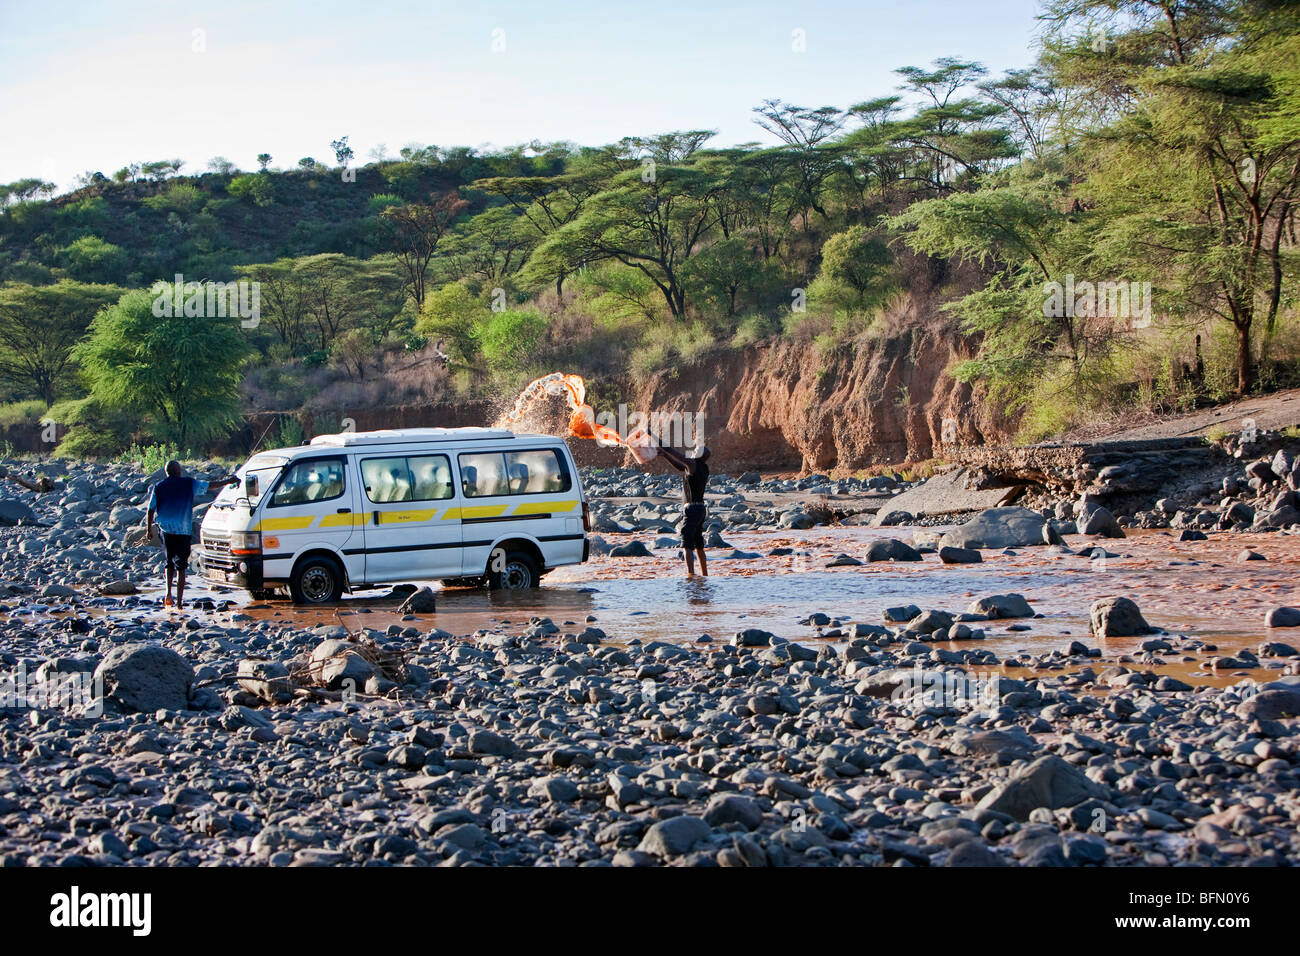 Kenya, Baringo District. Men wash a minibus, known as a matatu, in the muddy waters of the Perkerra River near Marigat. Stock Photo